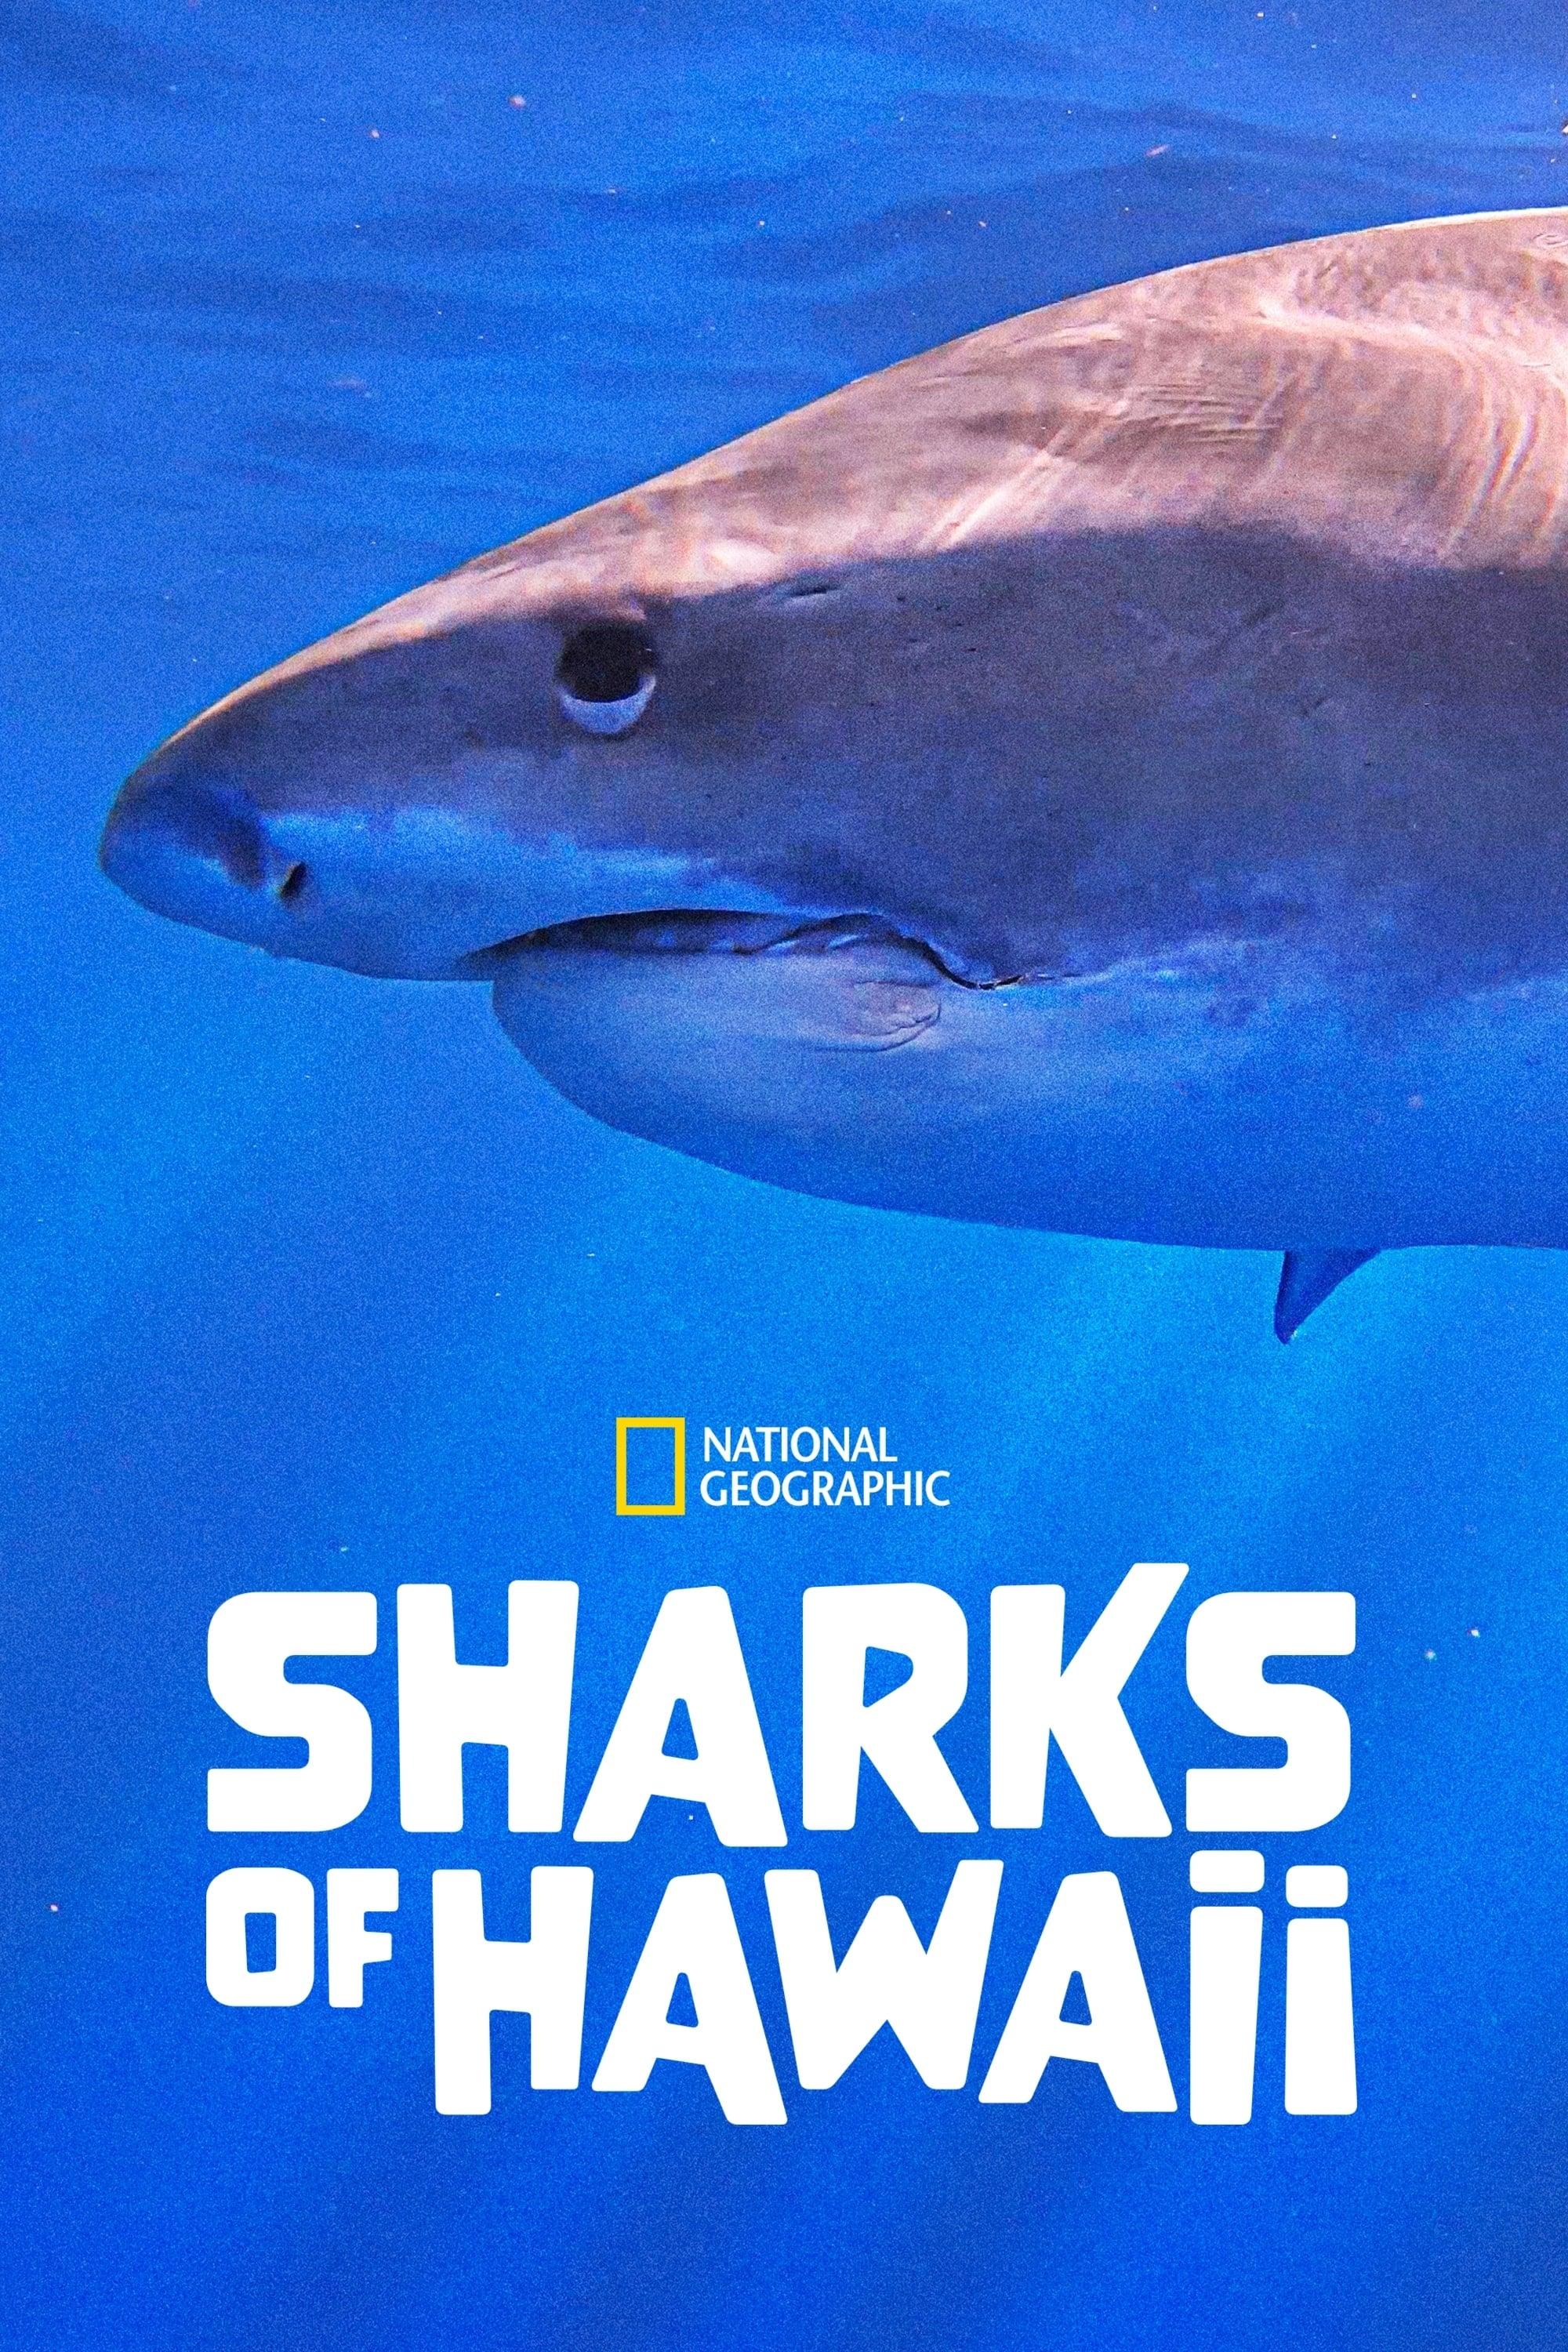 Sharks of Hawaii poster